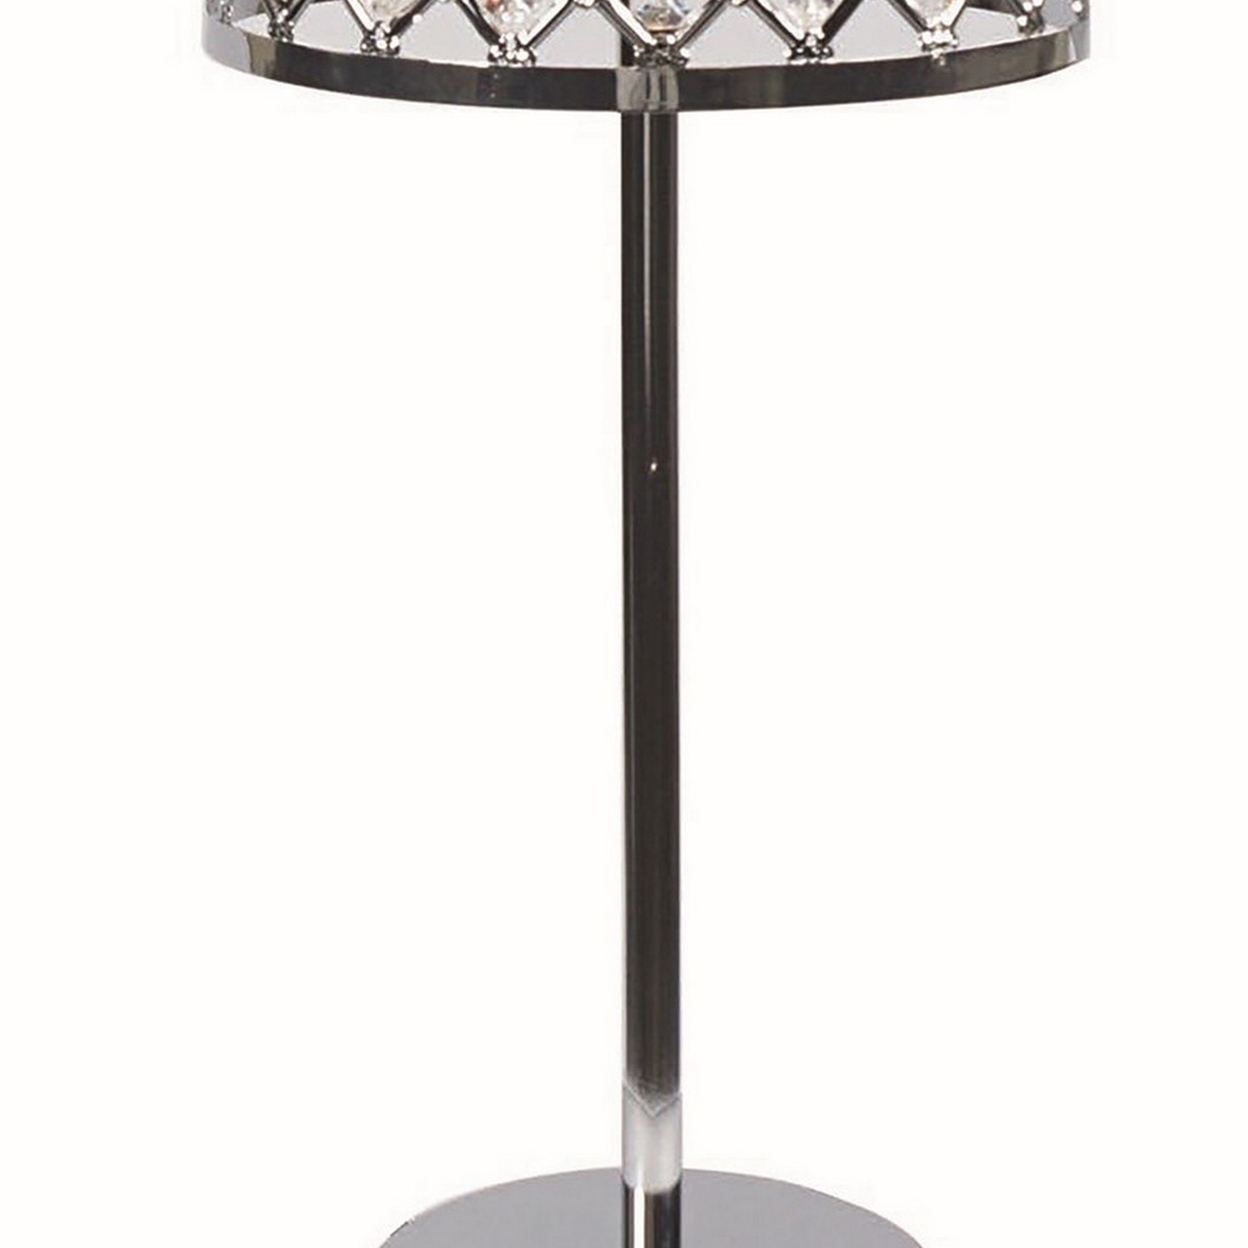 24 Inch Modern Table Lamp, Crystal Shade, Tessellated Metal Accents, Chrome- Saltoro Sherpi